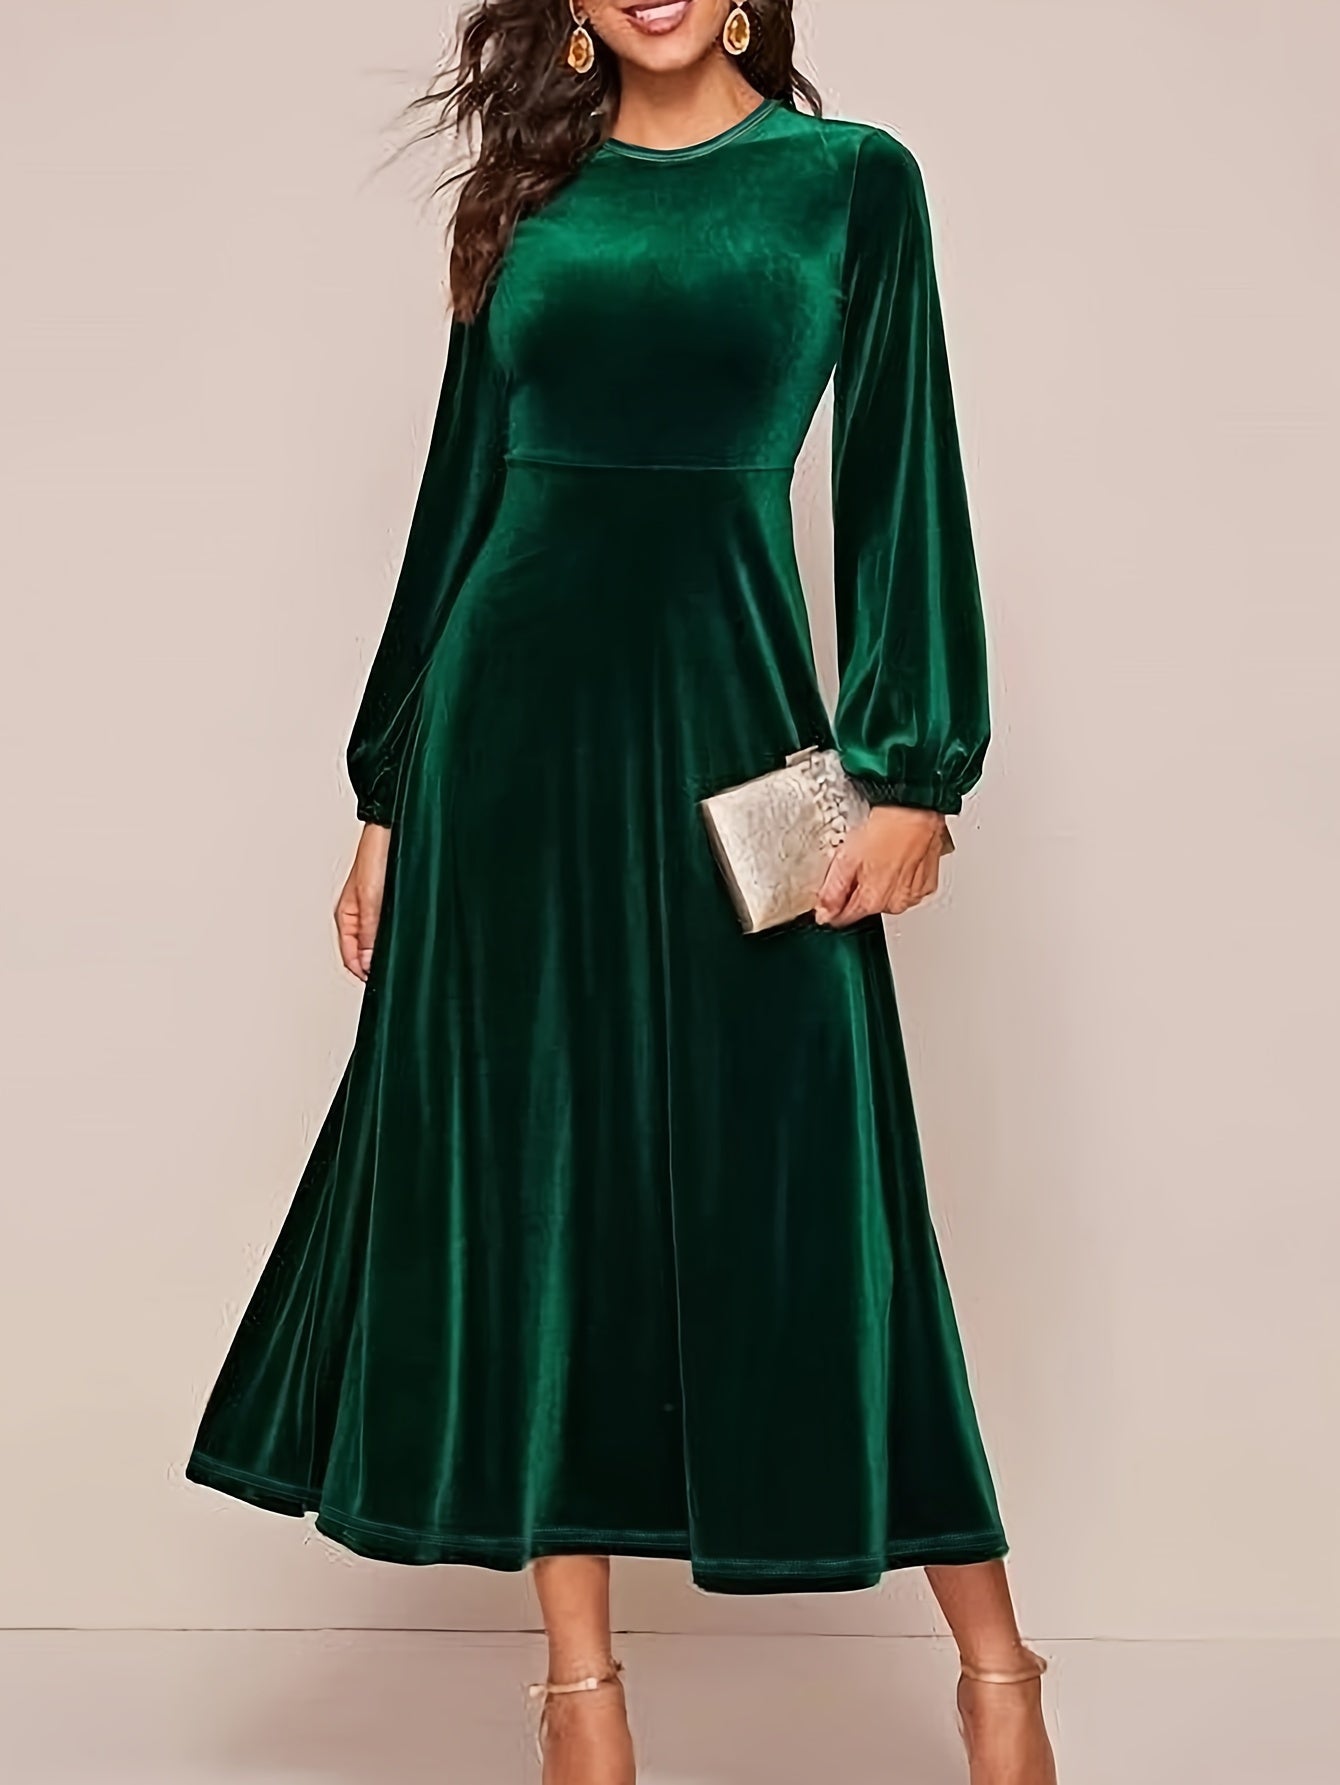 Antmvs Plus Size Elegant Dress, Women's Plus Solid Velvet Lantern Sleeve Round Neck Midi Dress